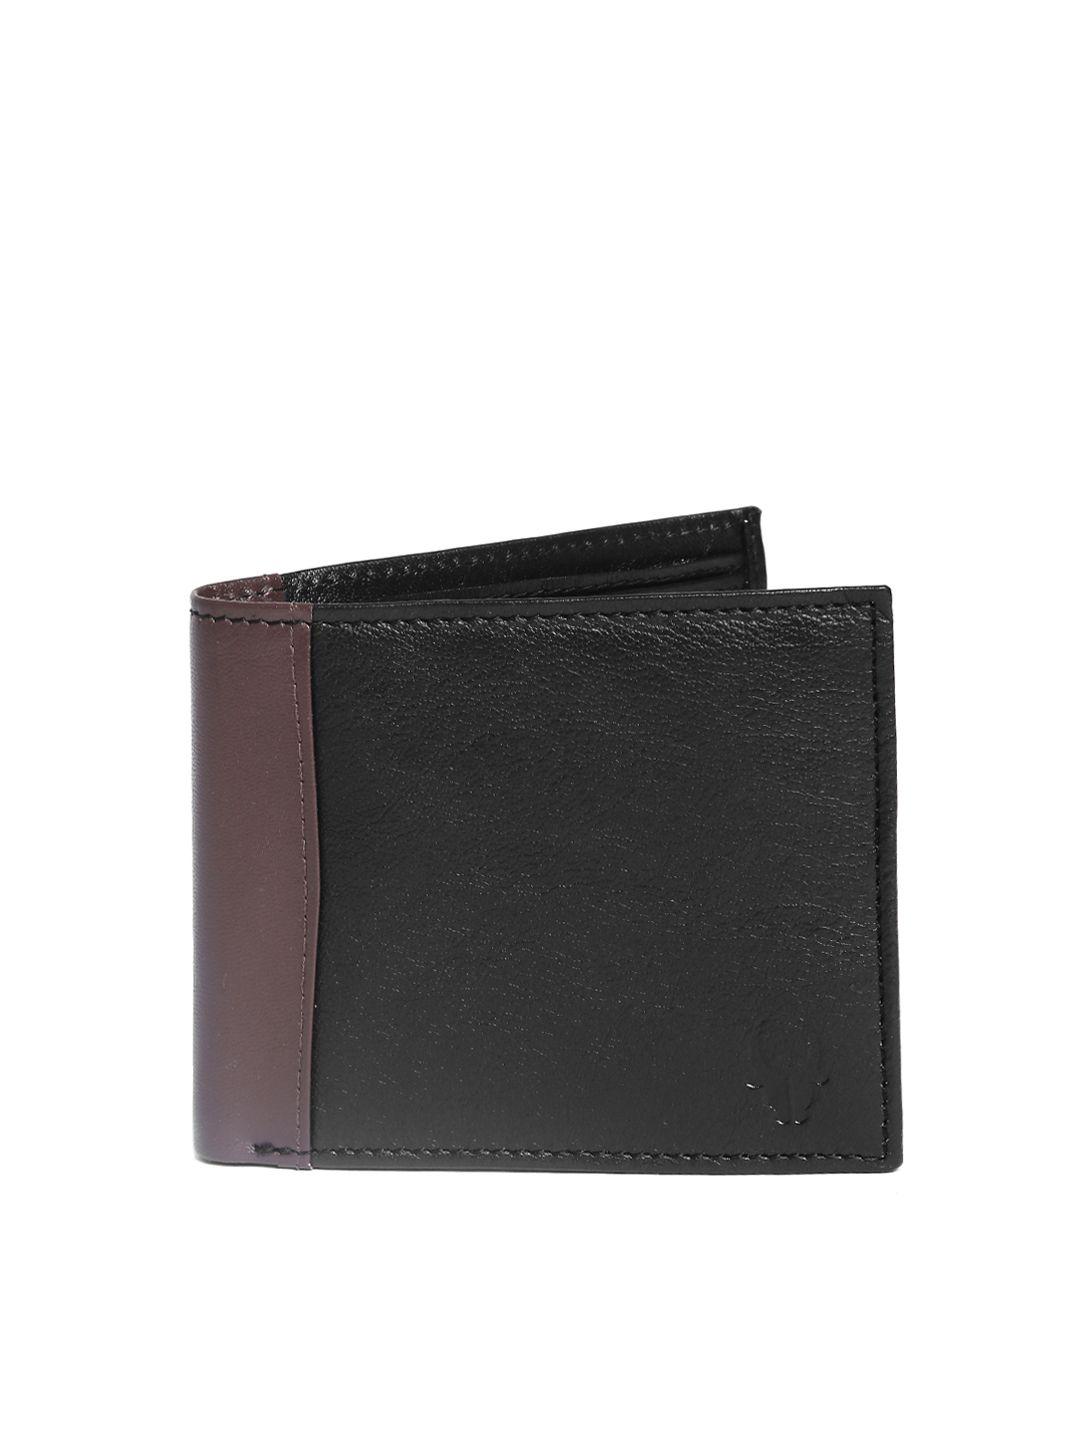 wildhorn men black leather wallet